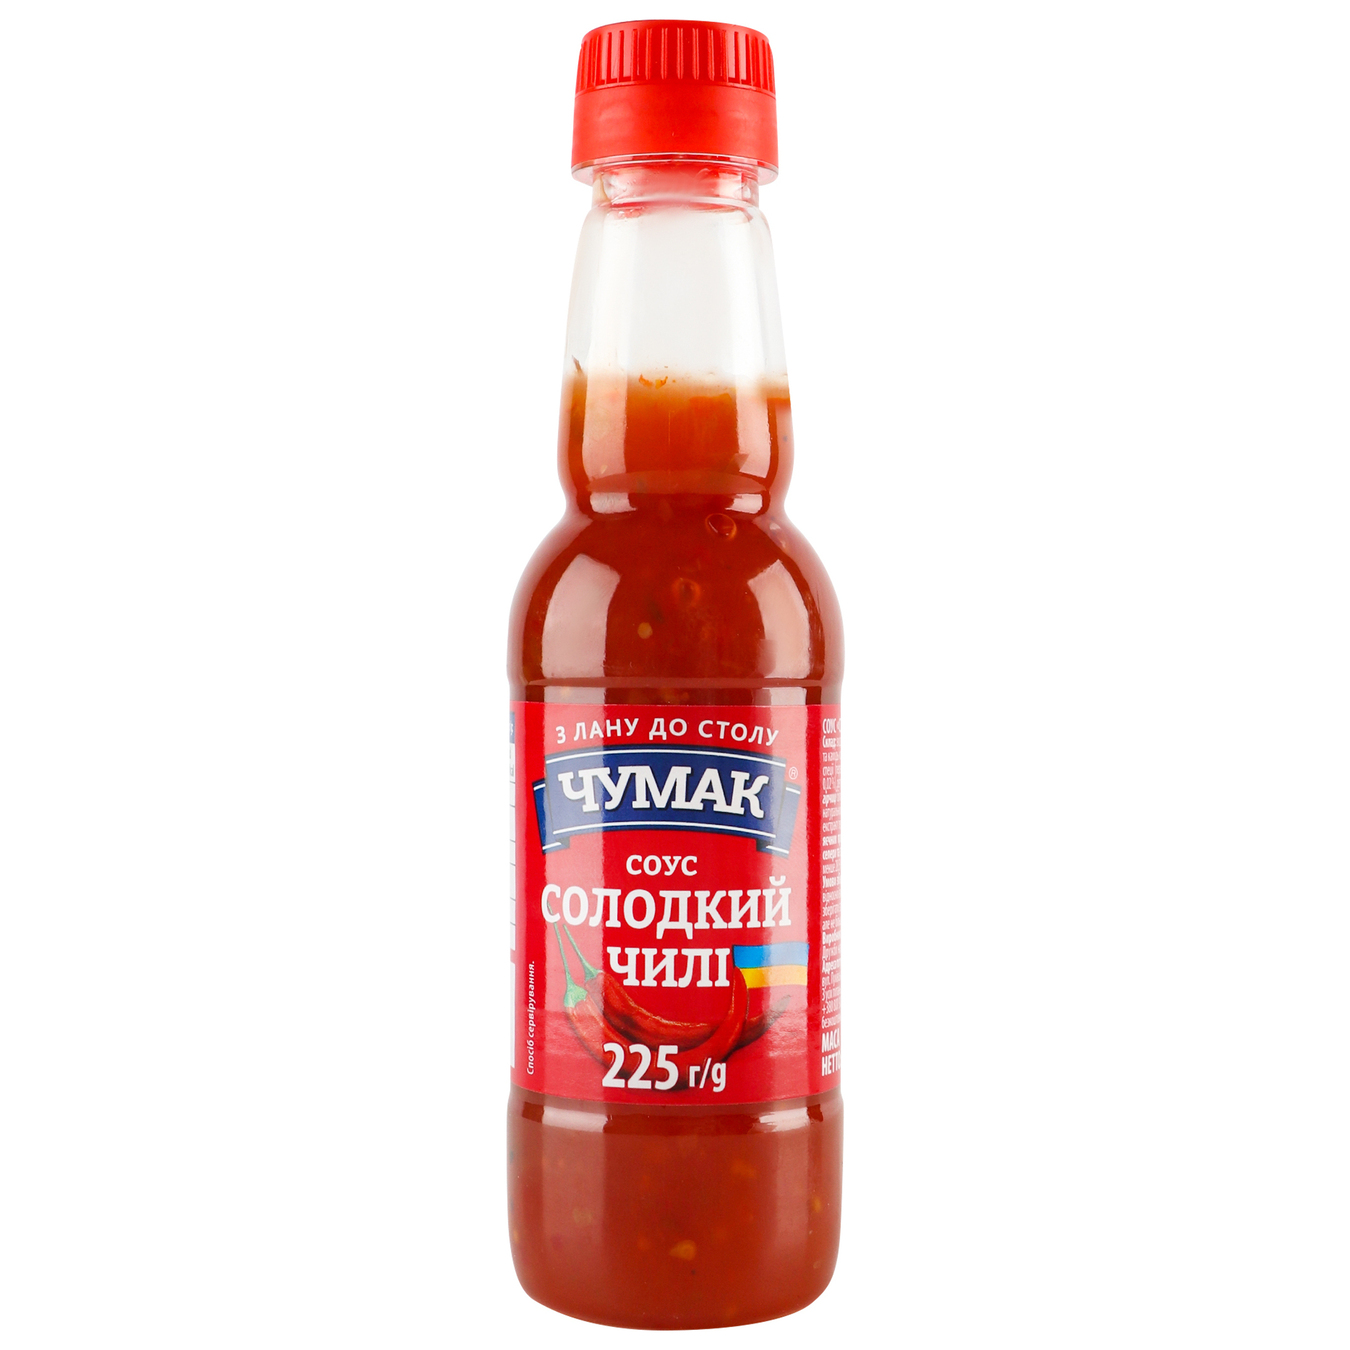 Sauce Chumak sweet chili 225g